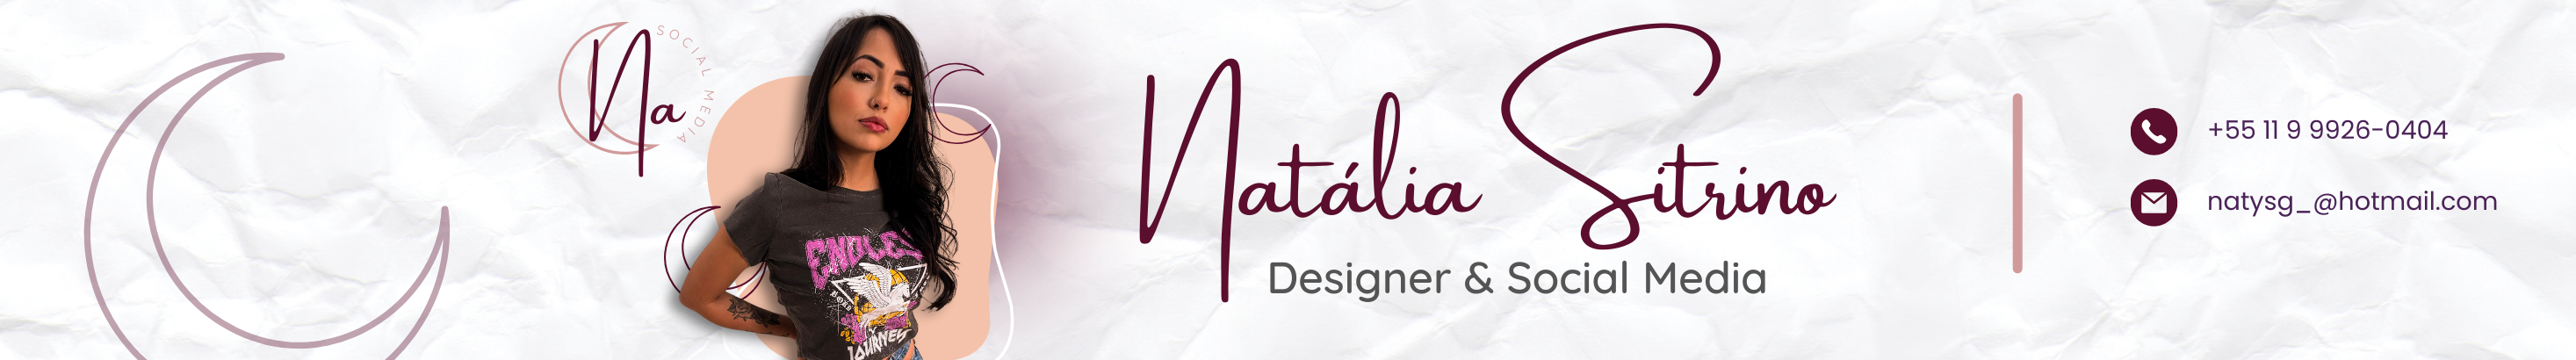 Bannière de profil de Natalia Sitrino